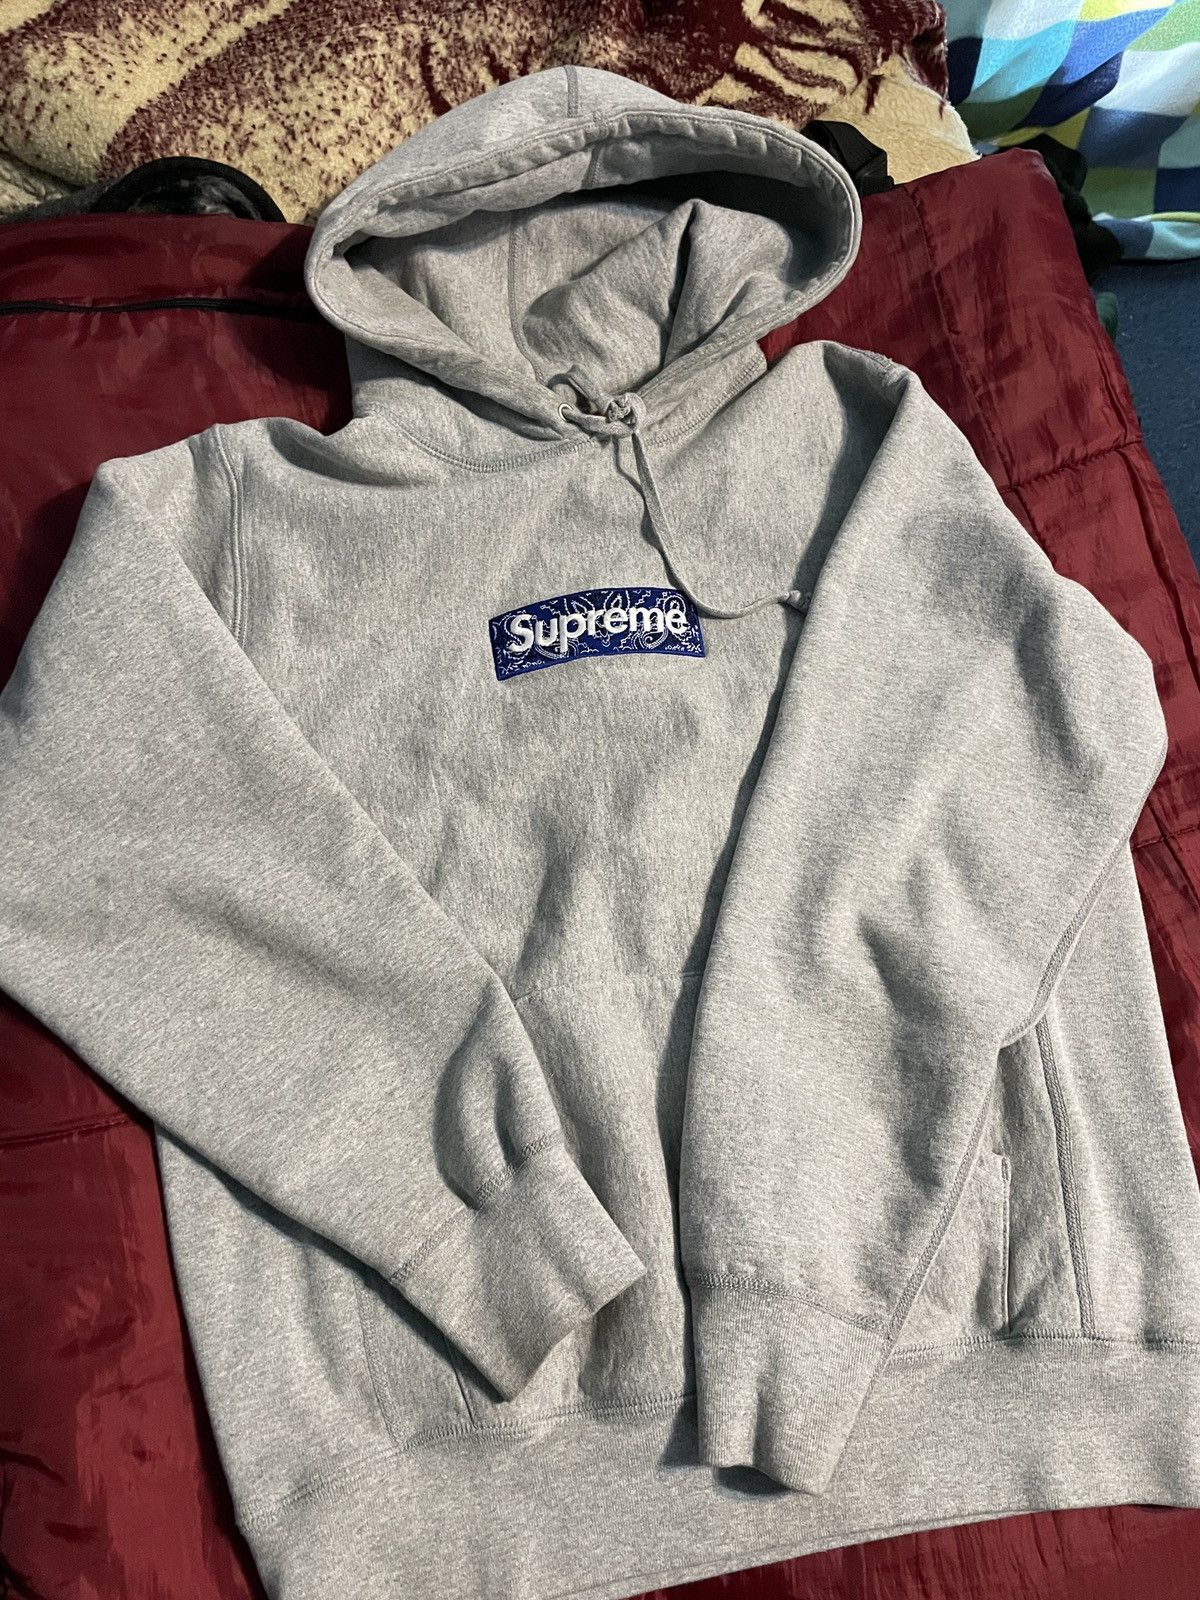 Supreme Men's Bandana Box Logo Hooded Sweatshirt